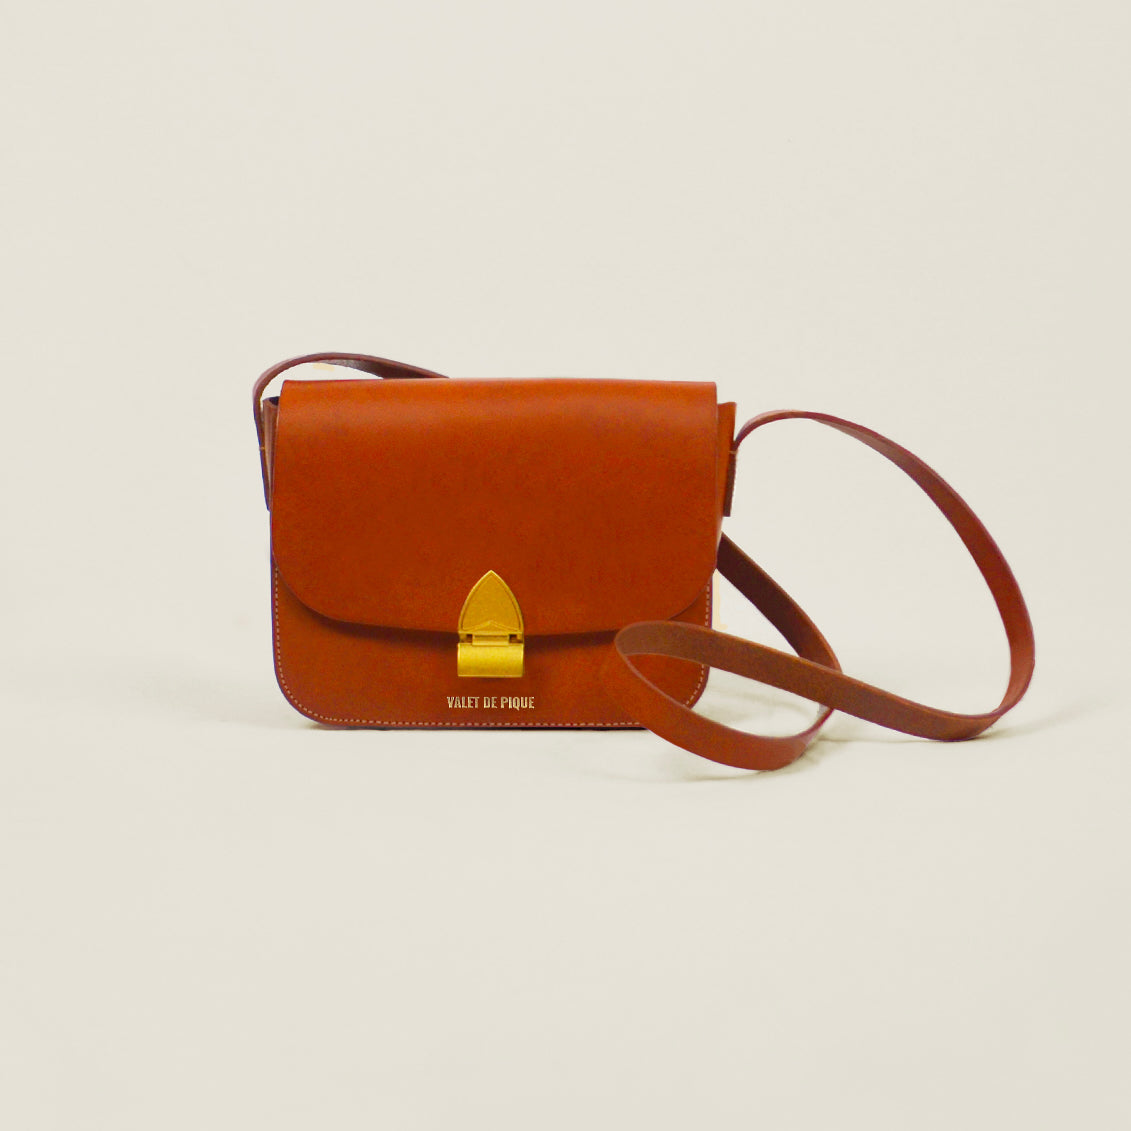 The Colette handbag